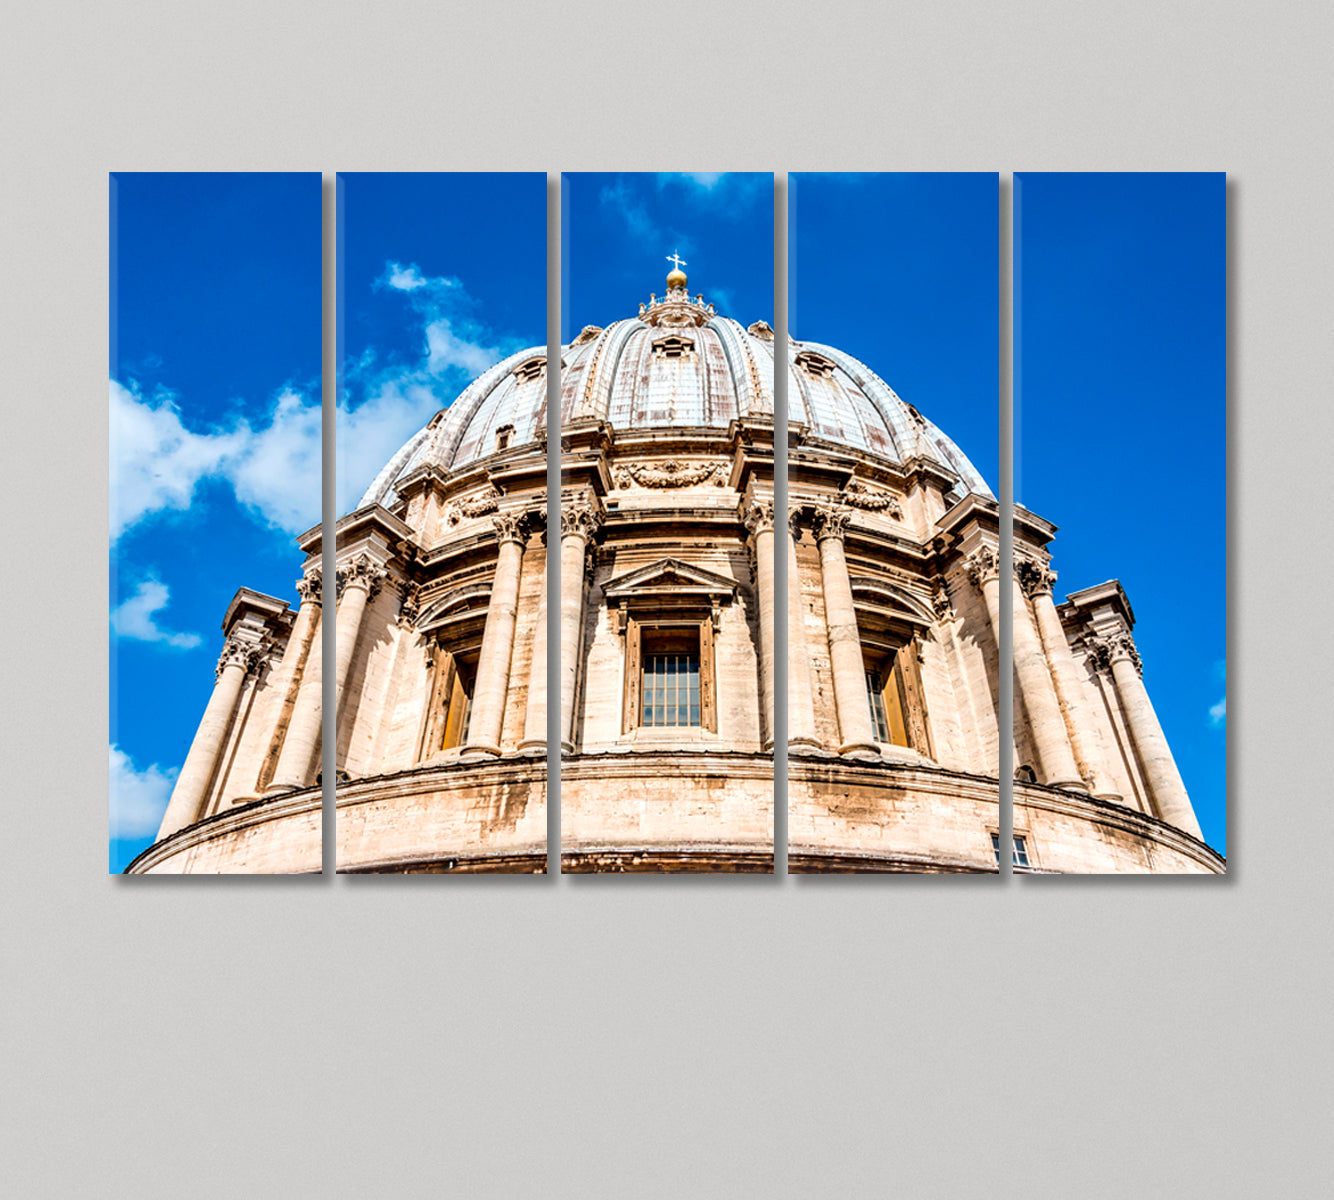 Dome of St. Peter's Basilica Vatican Italy Canvas Print-Canvas Print-CetArt-5 Panels-36x24 inches-CetArt